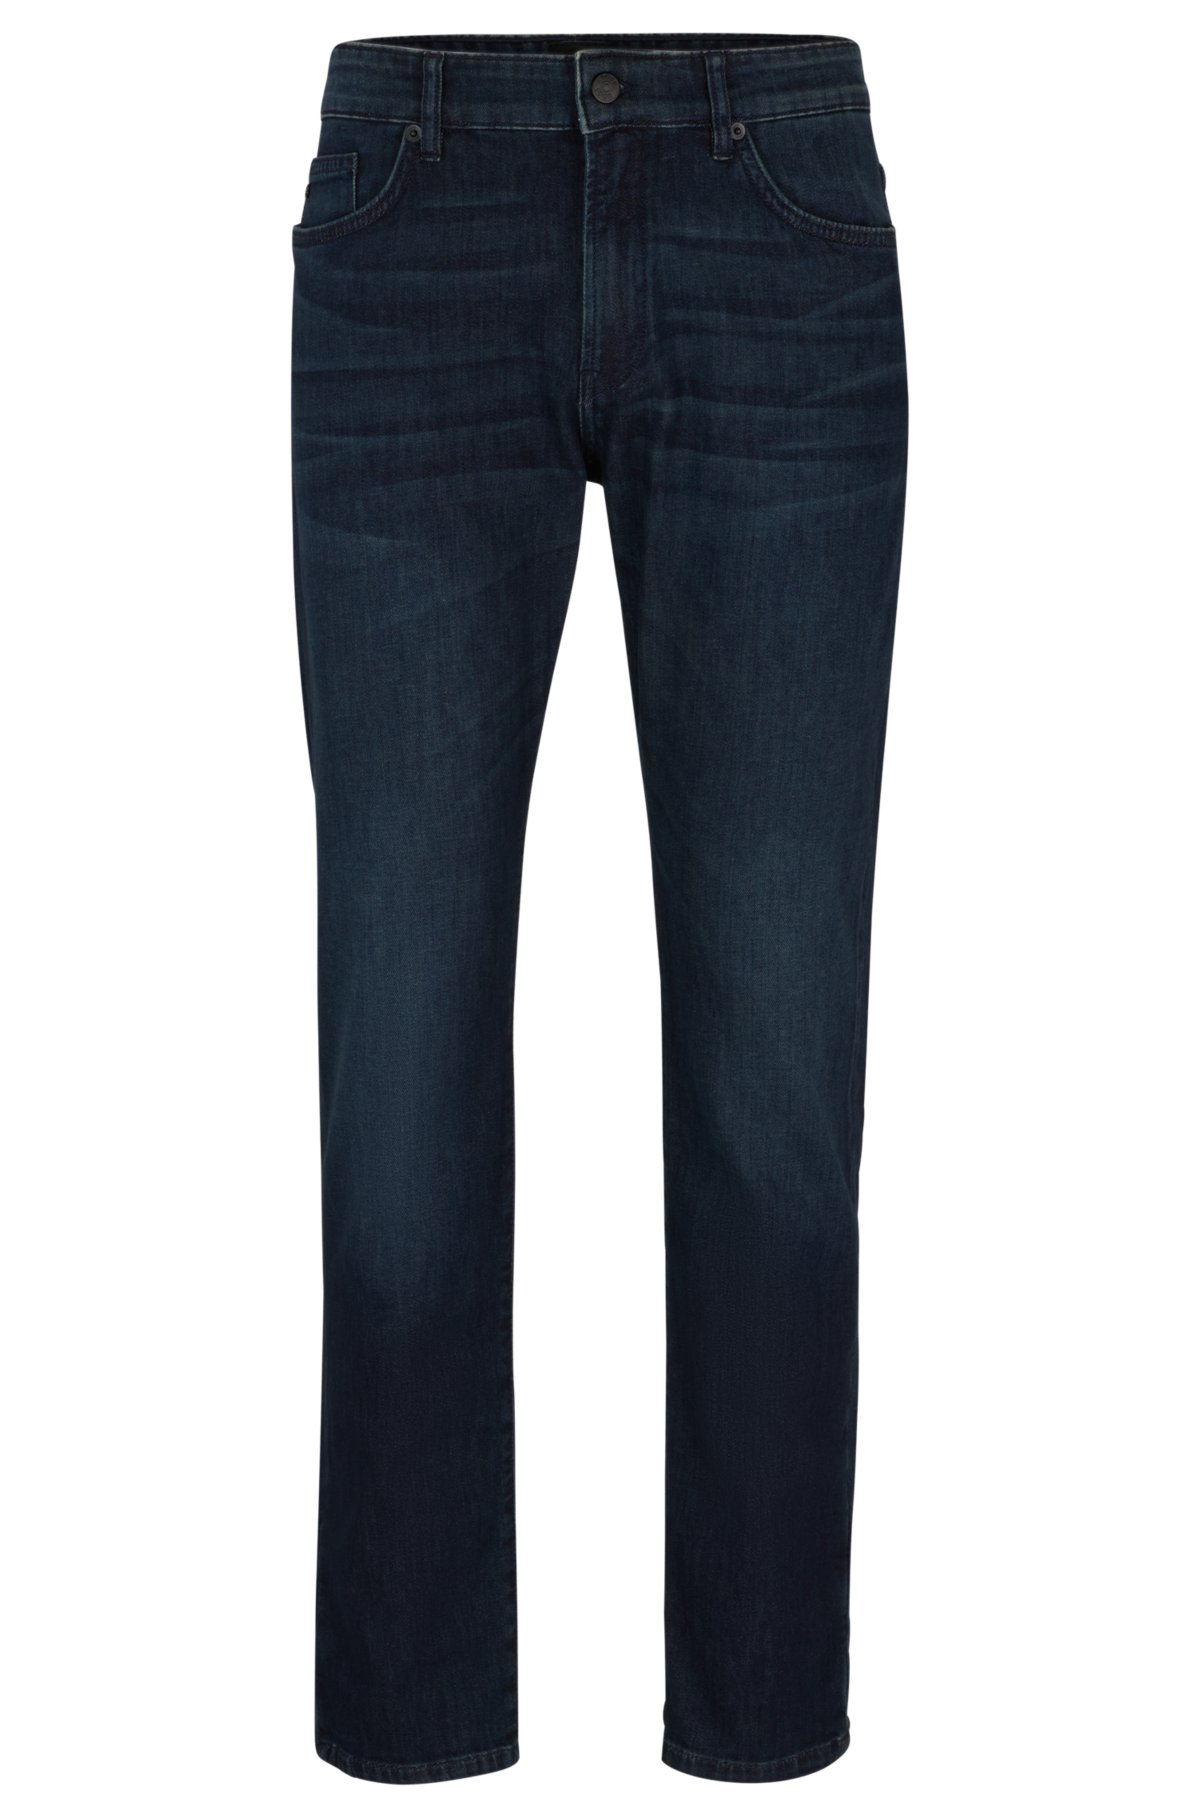 BOSS - Slim-fit jeans van comfortabel blauw stretchdenim